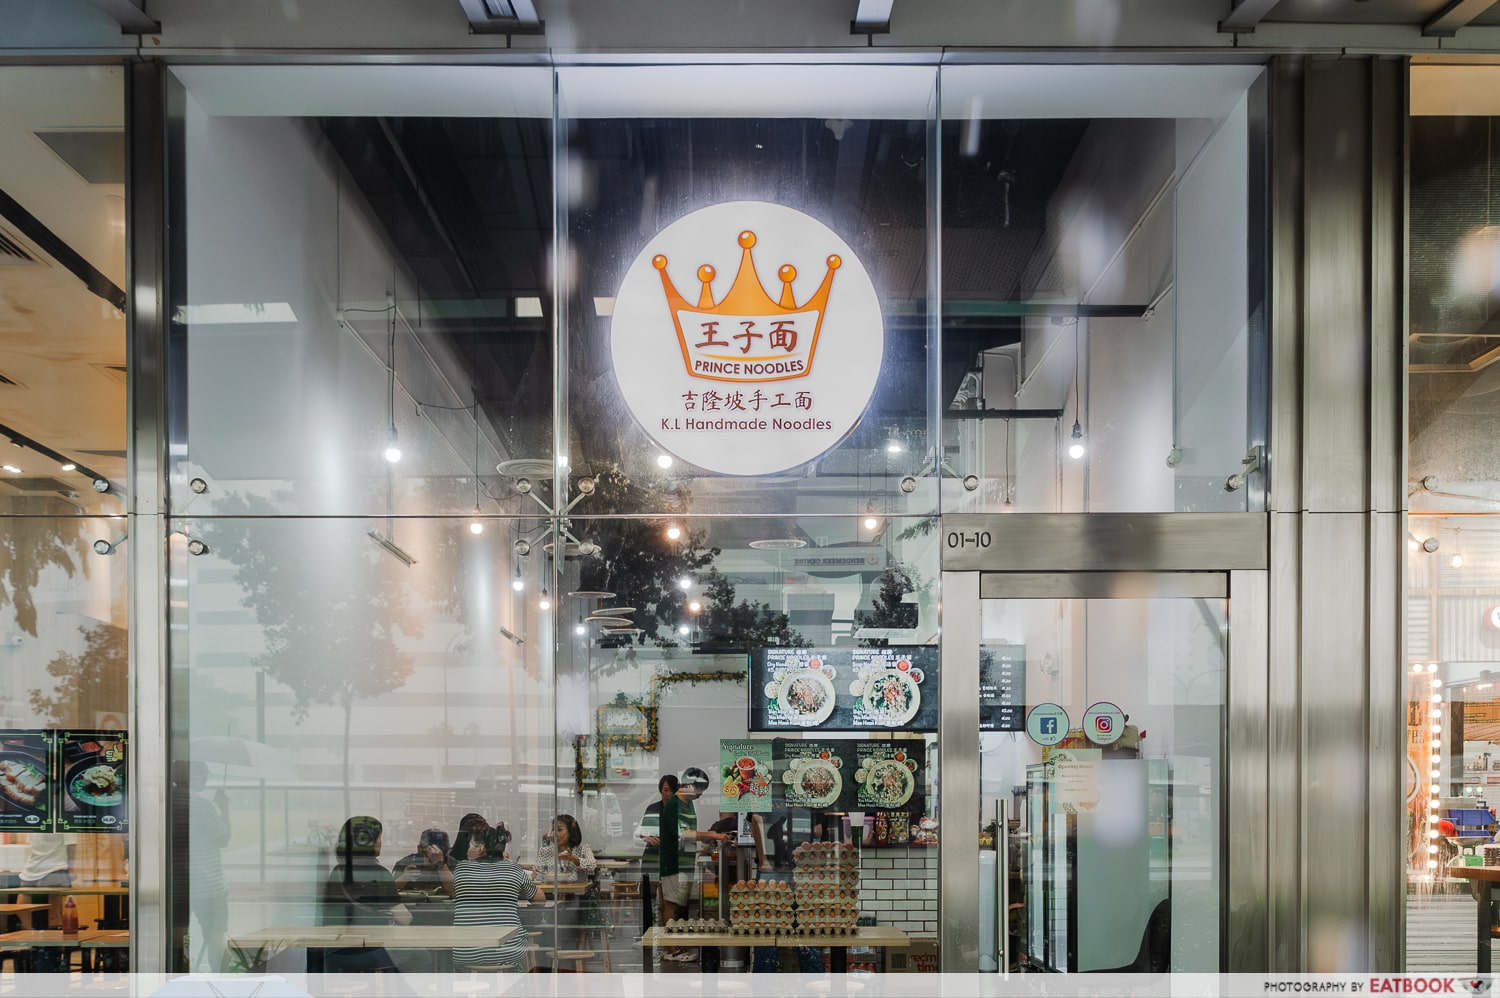 Prince Noodles Review: KL Ban Mian In Jalan Besar | Eatbook.sg